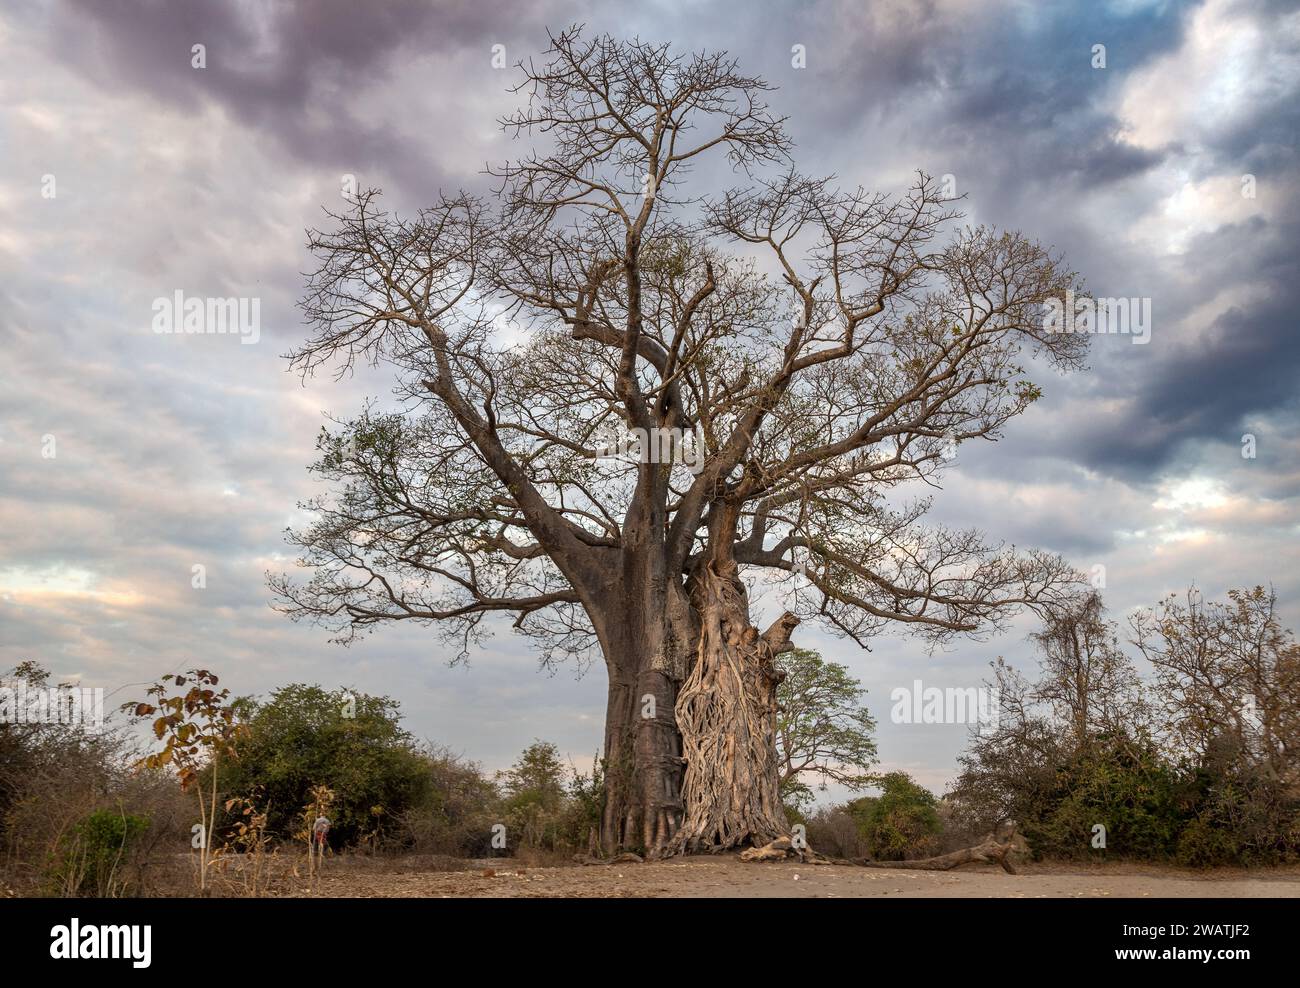 Dead Baobab tree killed by Strangler fig, Liwonde National Park, Malawi Stock Photo